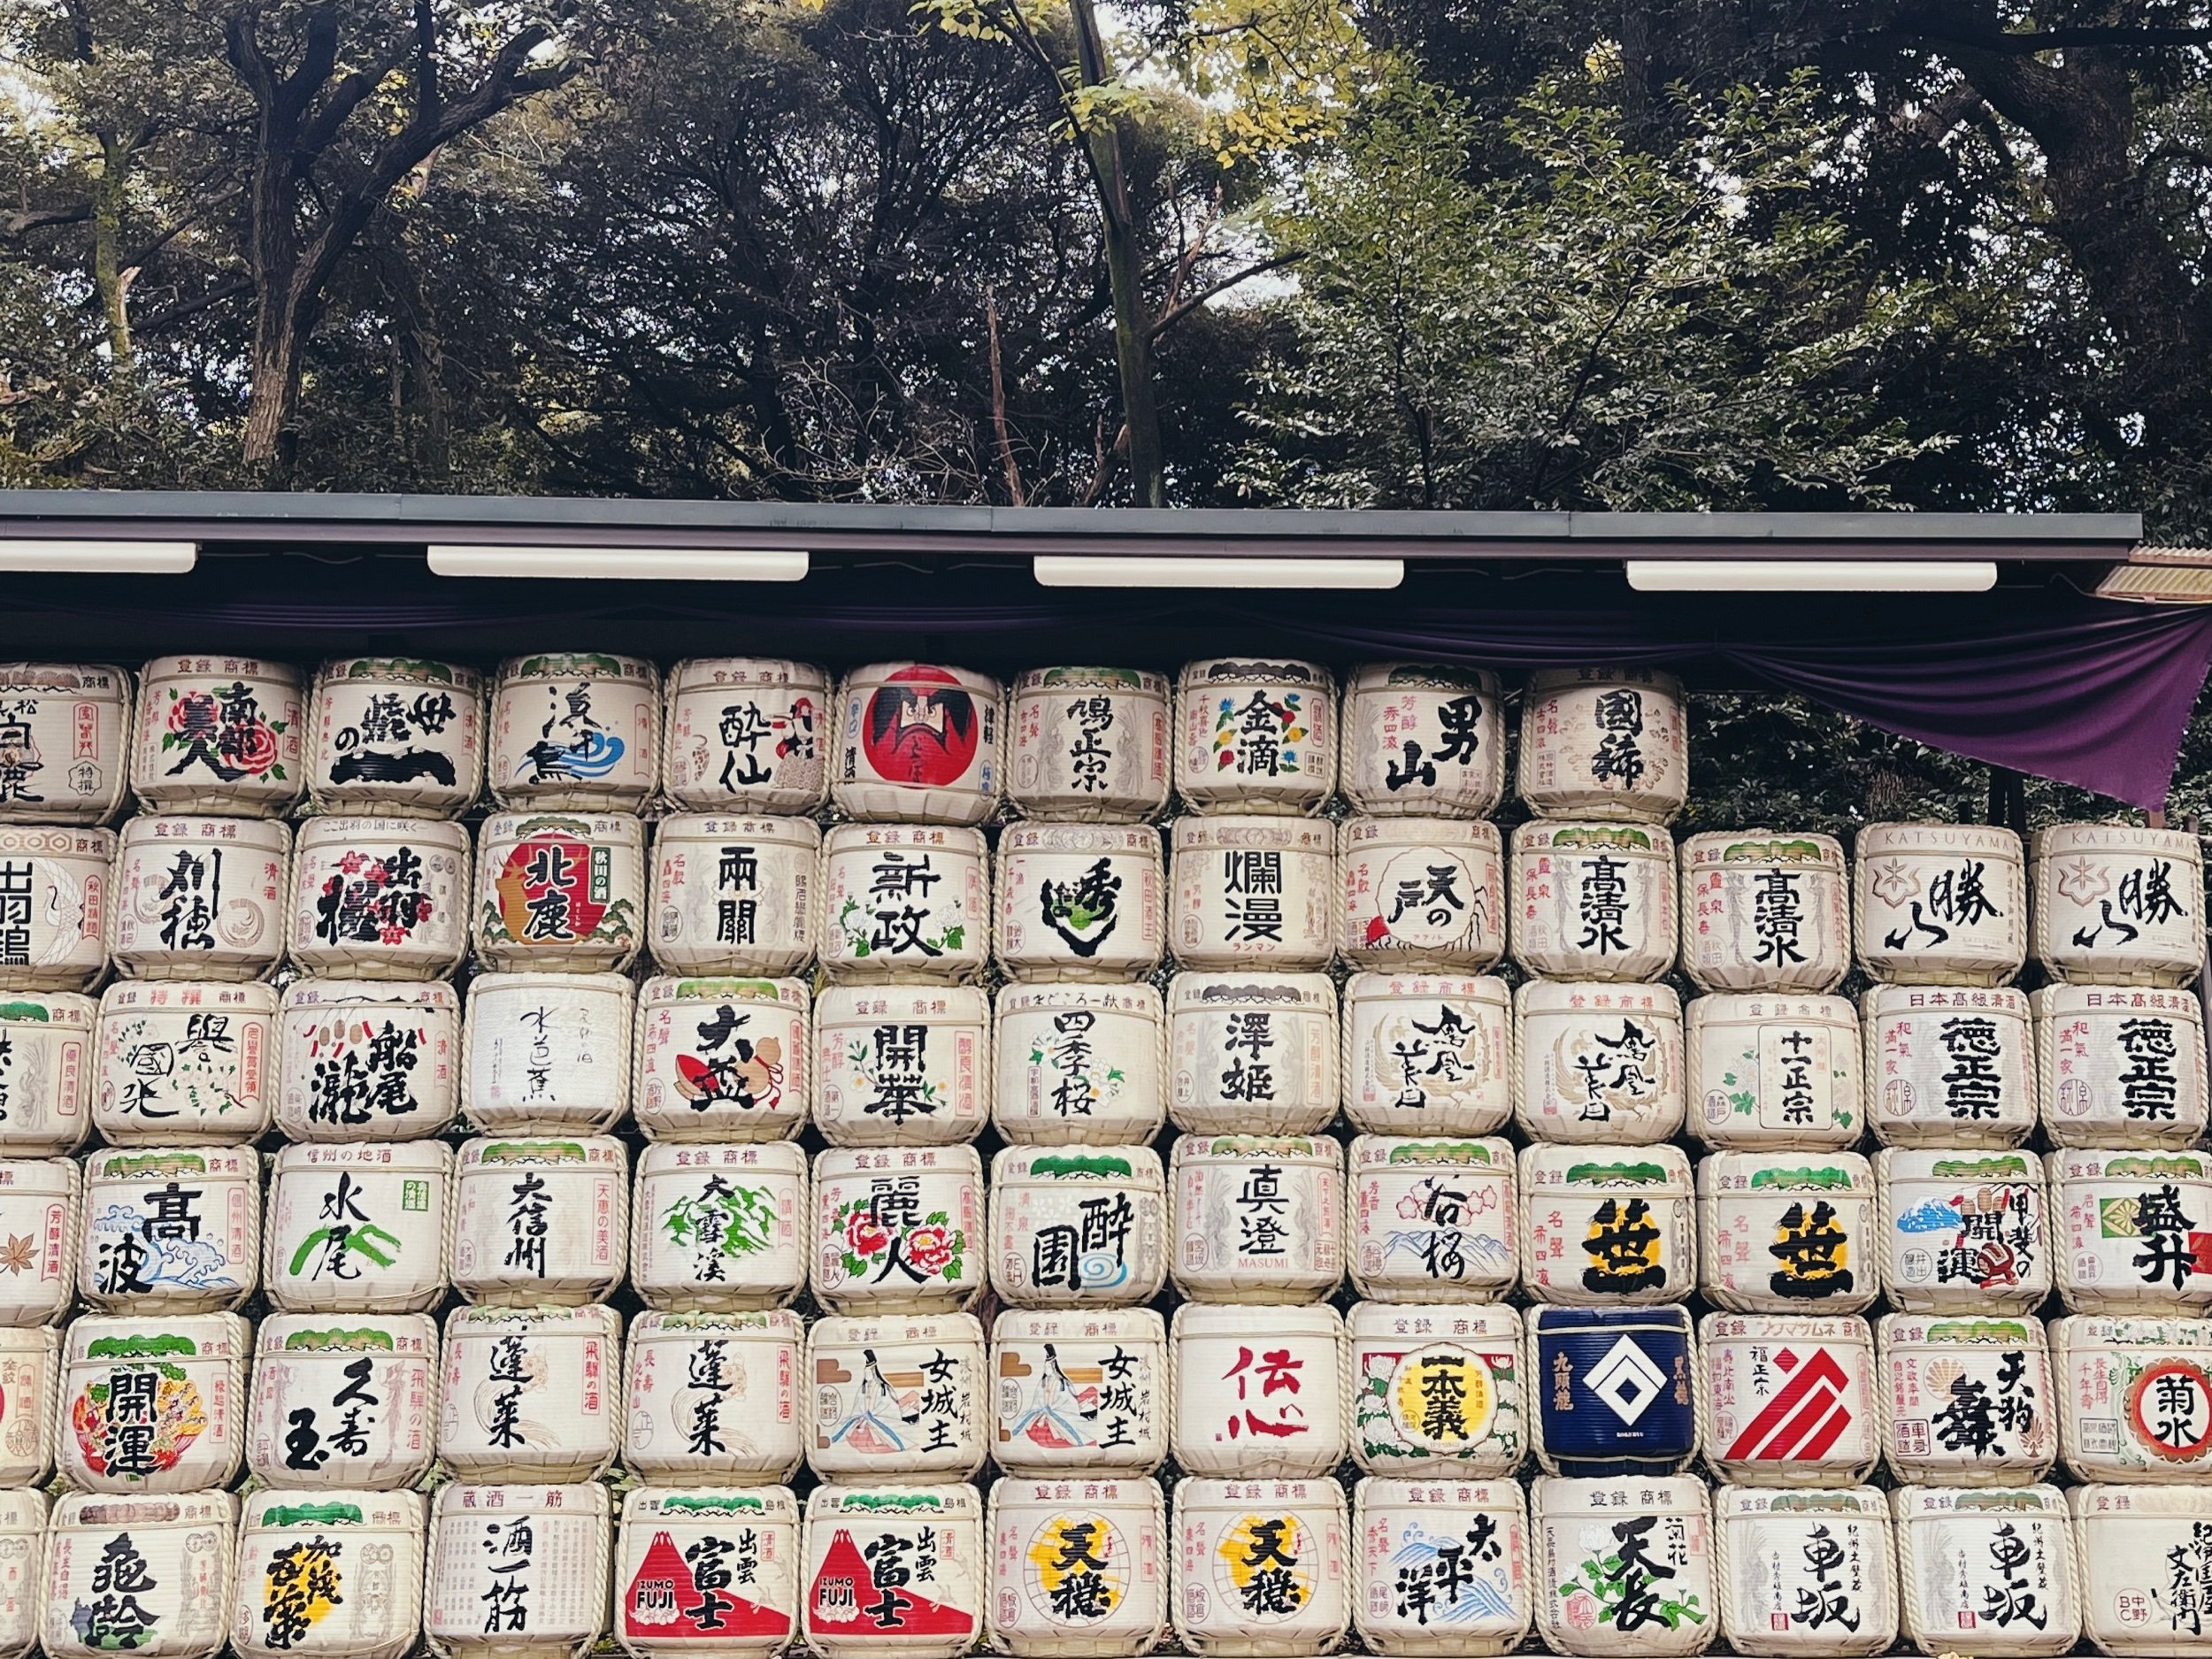 Wall of sake barrels in Yoyogi Park